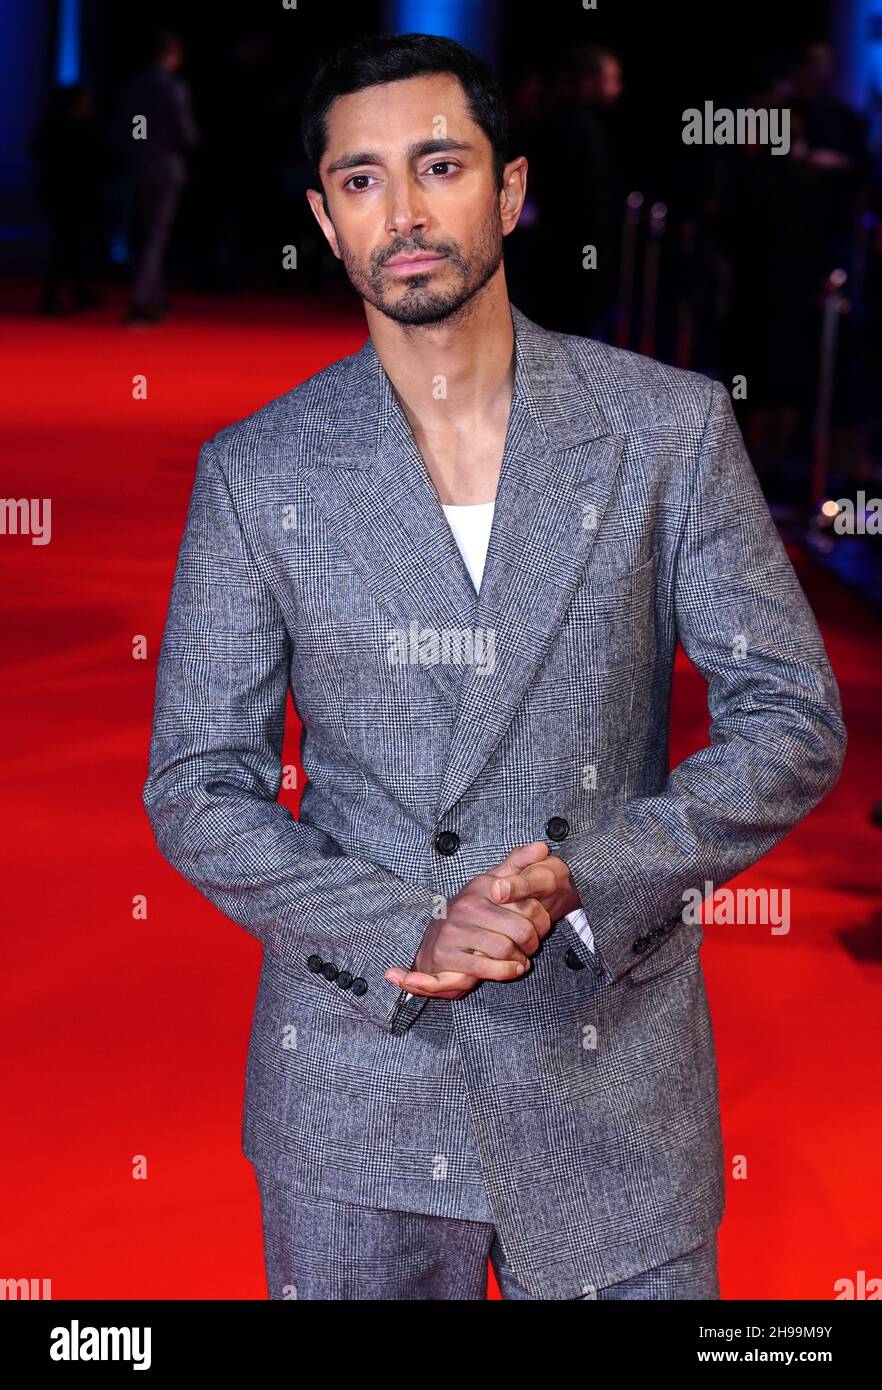 RIZ Ahmed bei der Verleihung der British Independent Film Awards 24th in Old Billingsgate, London. Bilddatum: Sonntag, 5. Dezember 2021. Stockfoto